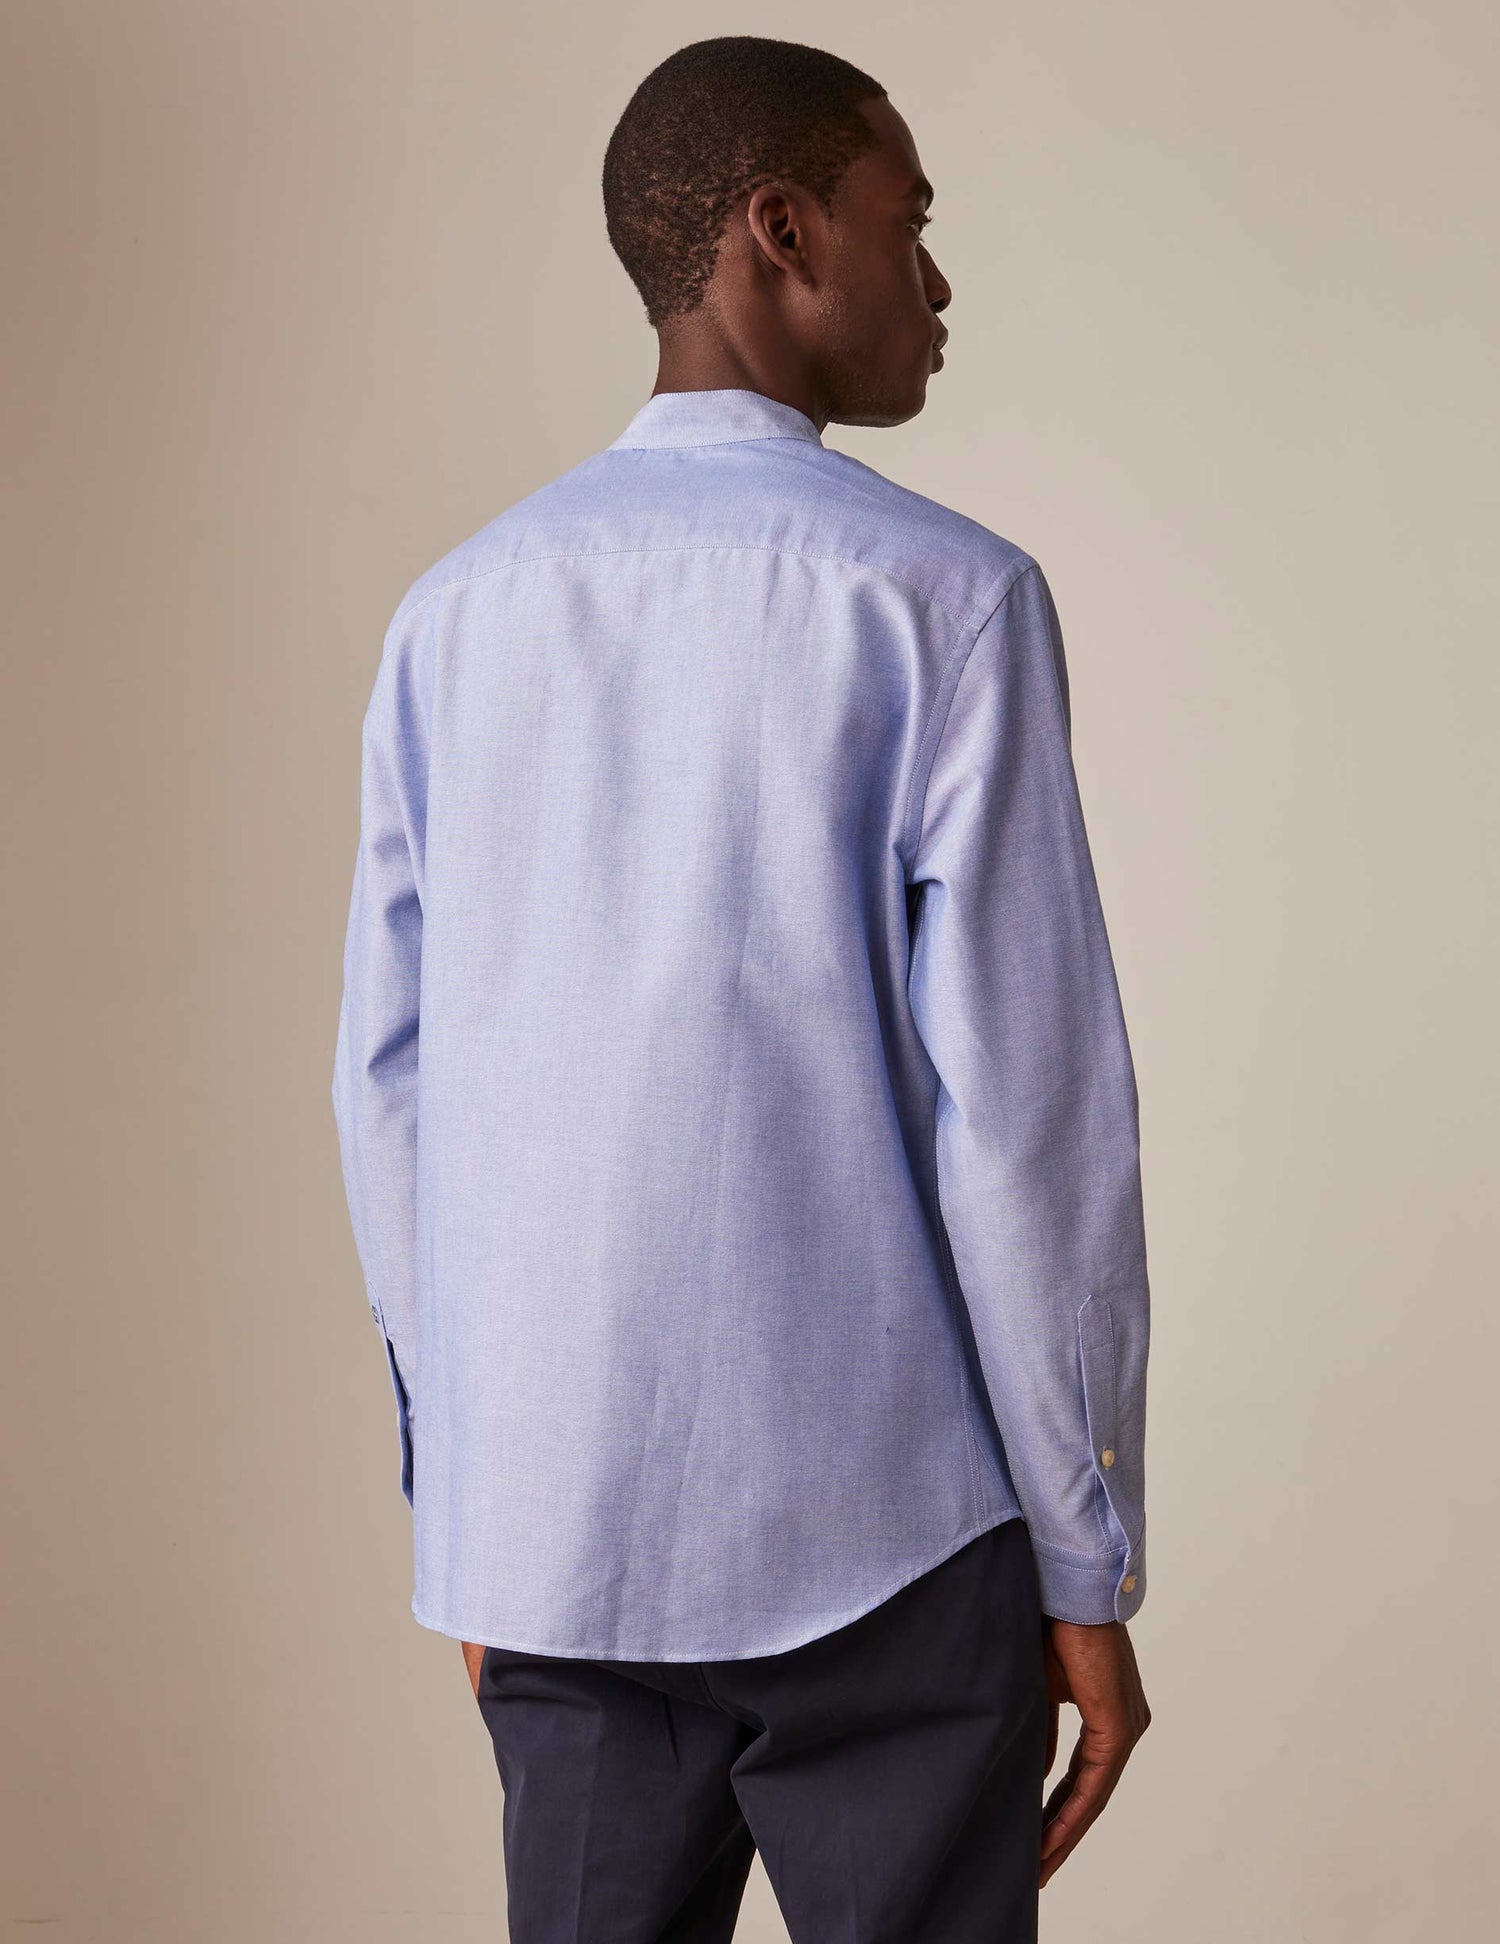 Blue Carl shirt - Oxford - Open straight Collar#2